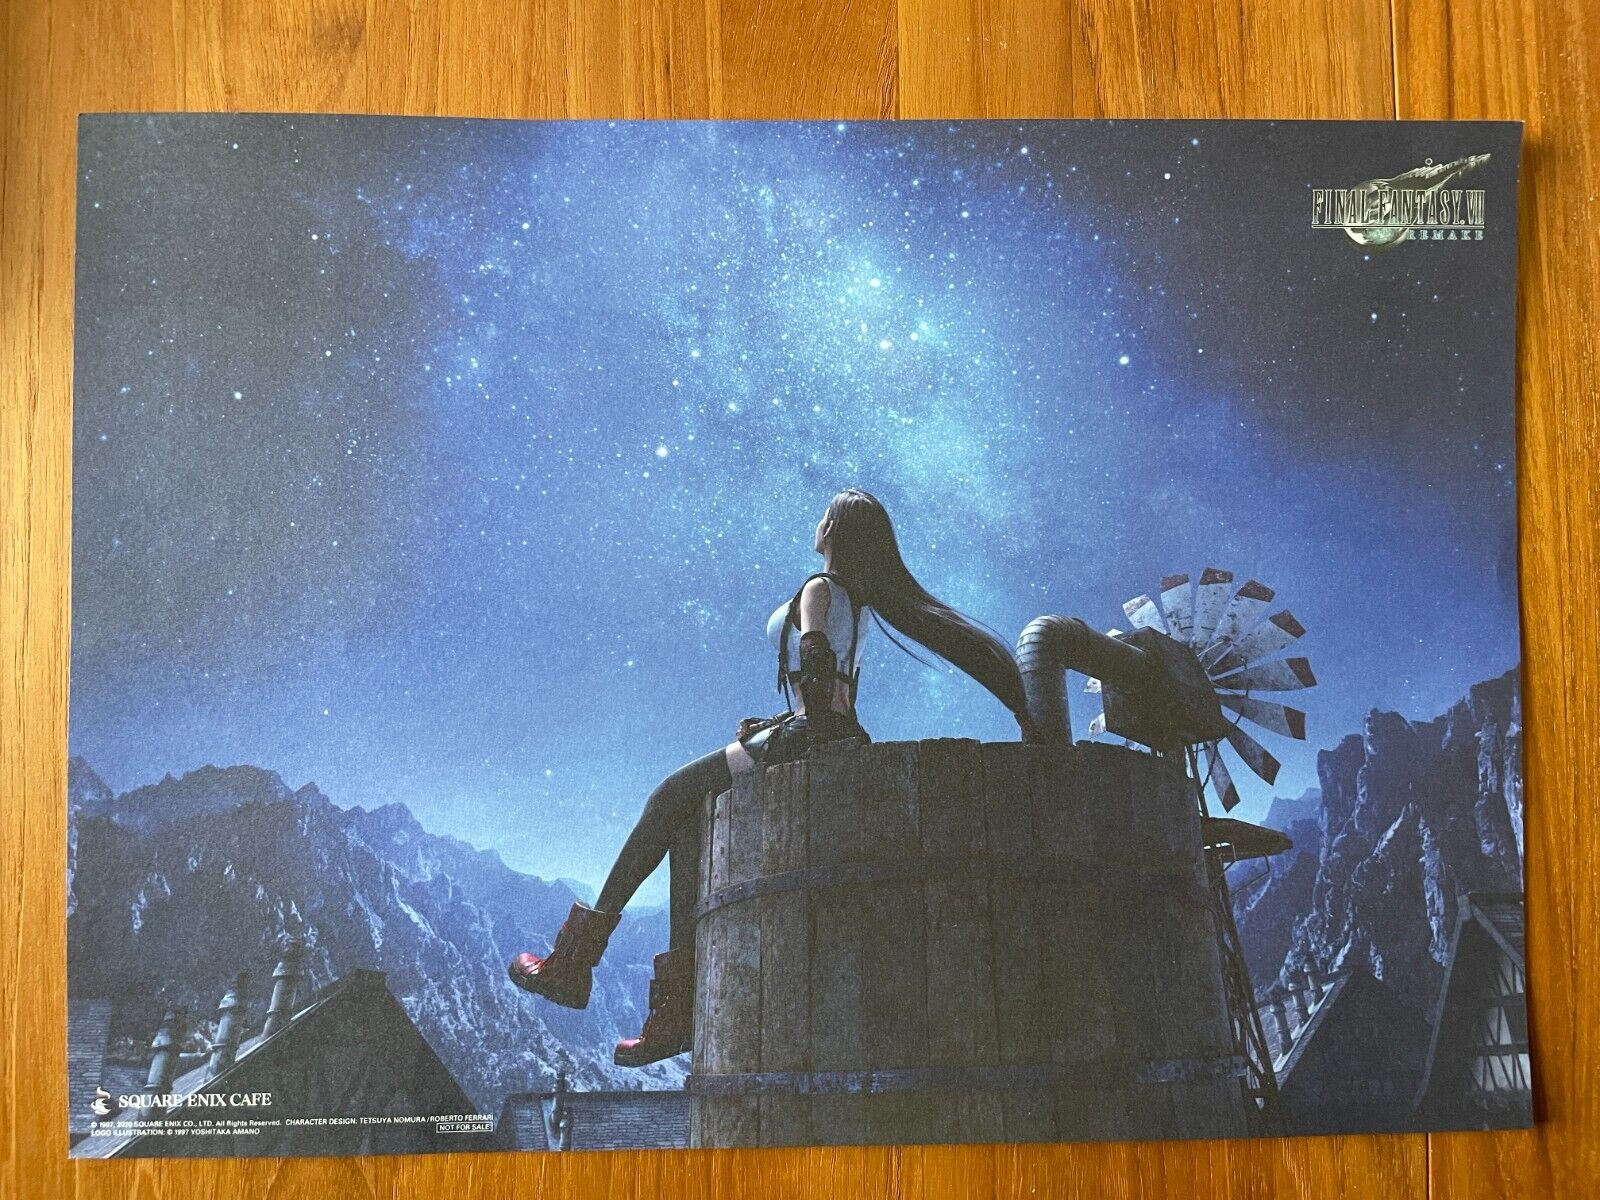 Square Enix Cafe Final Fantasy 7 Remake Tifa Placemat Place mat Paper Poster